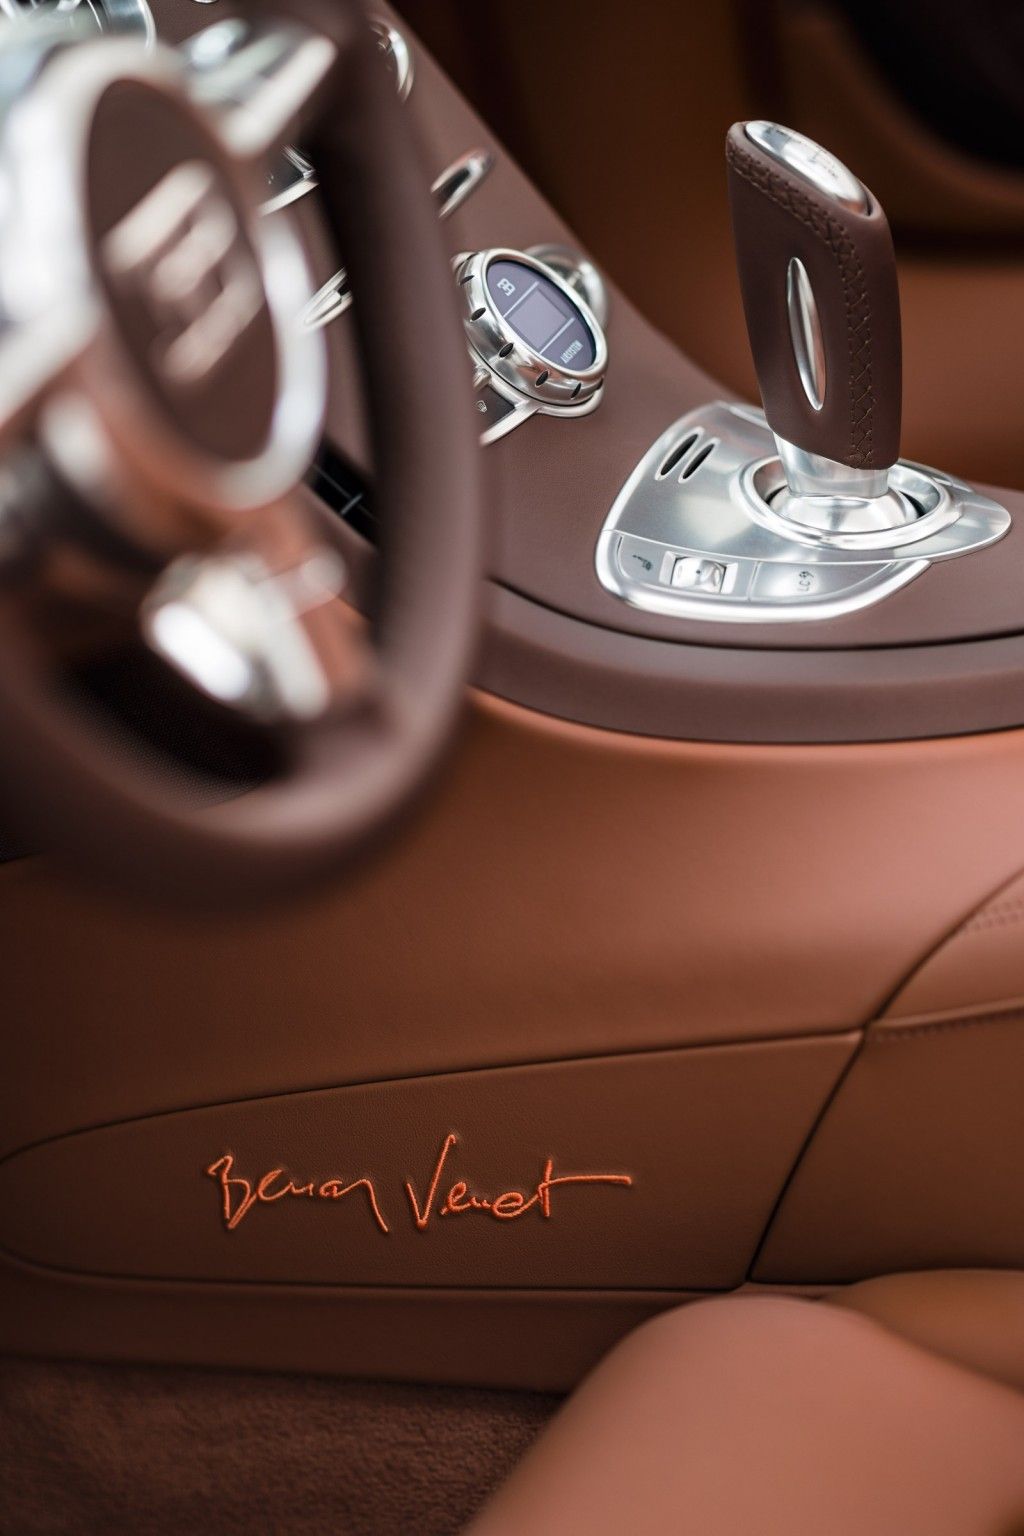 2012 Bugatti Veyron Grand Sport by Bernar Venet